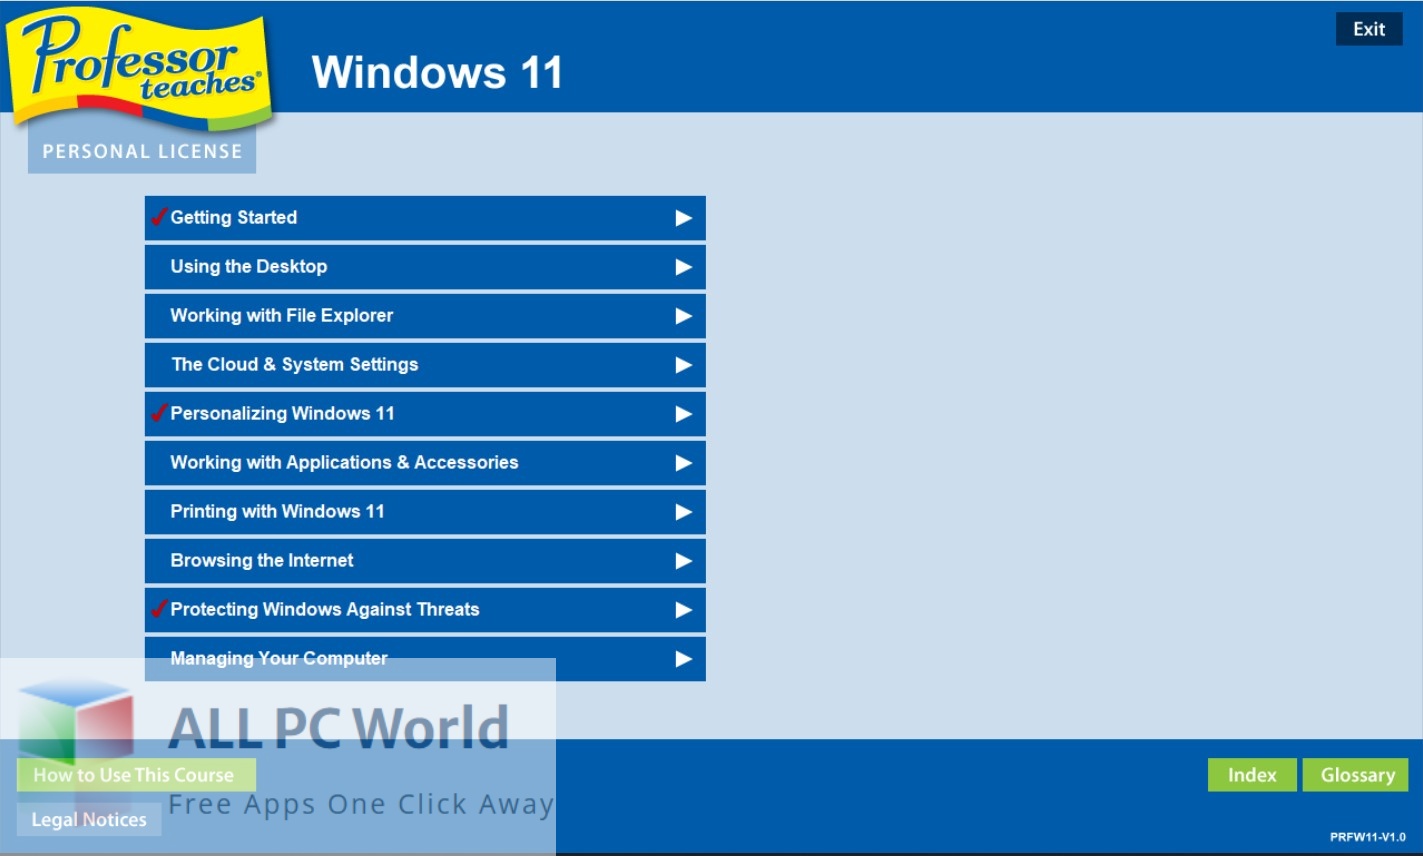 Professor Teaches Windows 11 Free Download